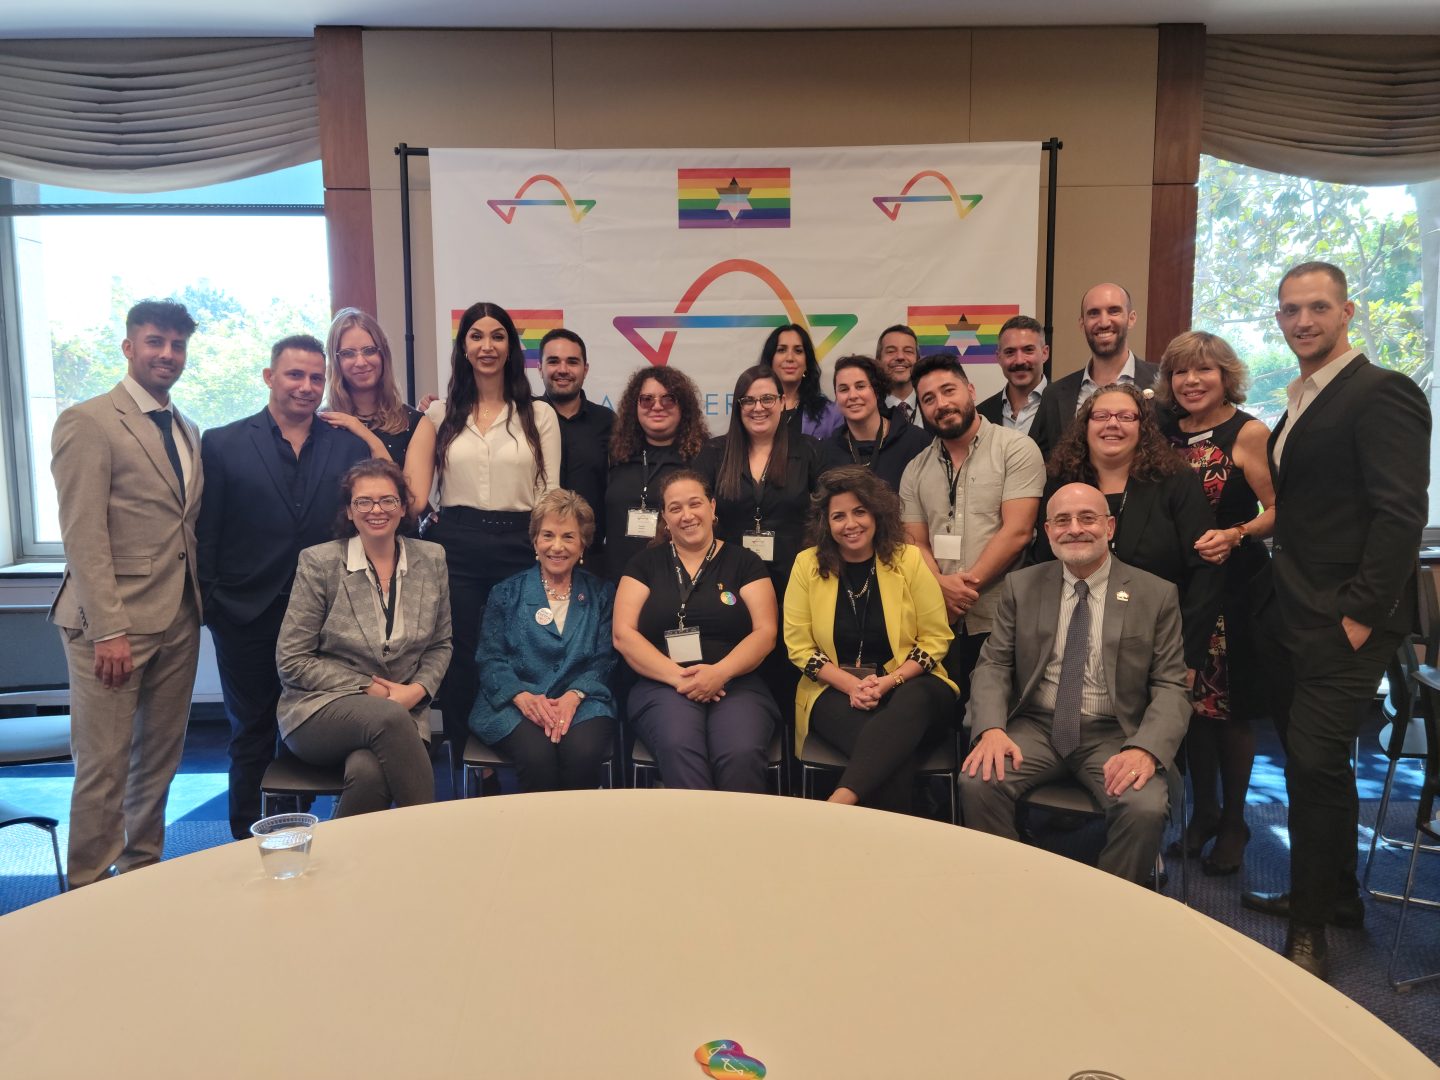 A Wider Bridge Mission to America, Israeli LGBTQ leaders